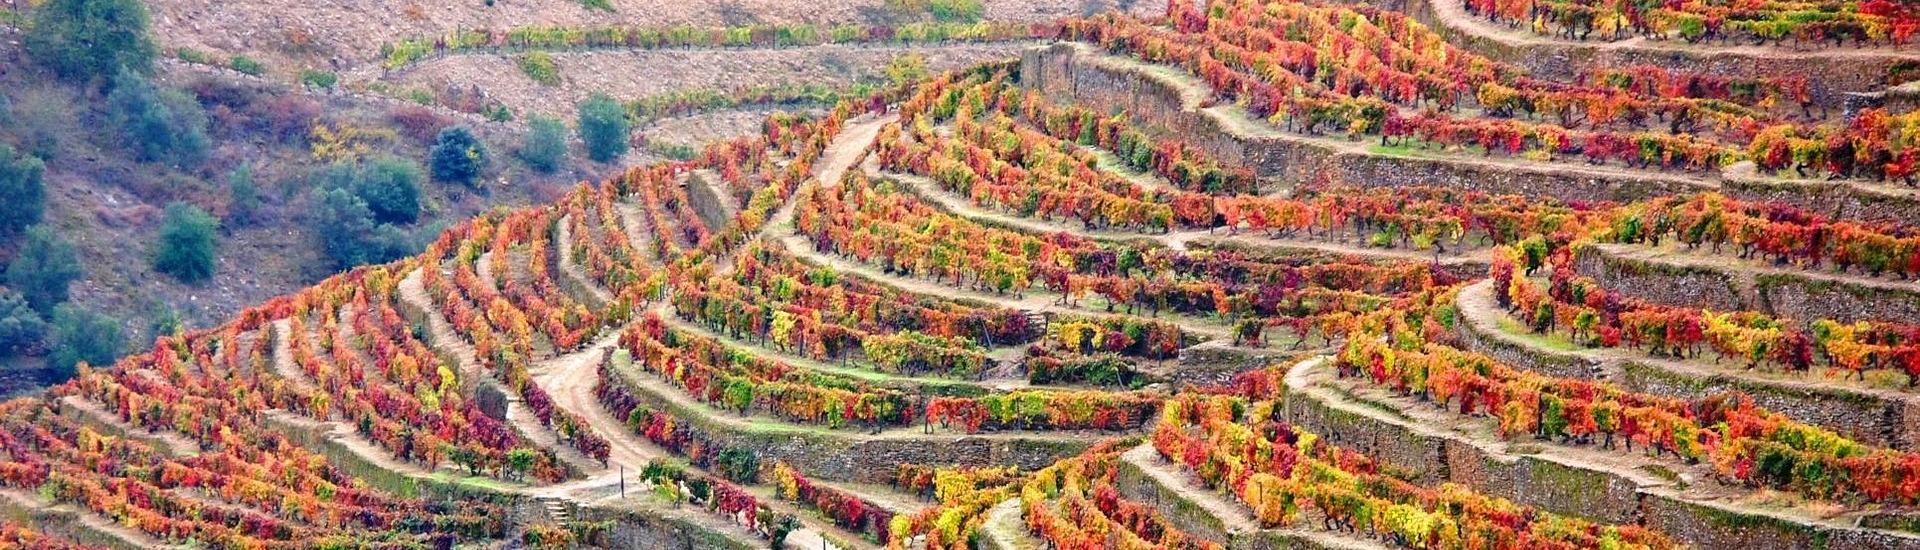 Vindimas - winobranie w Portugalii